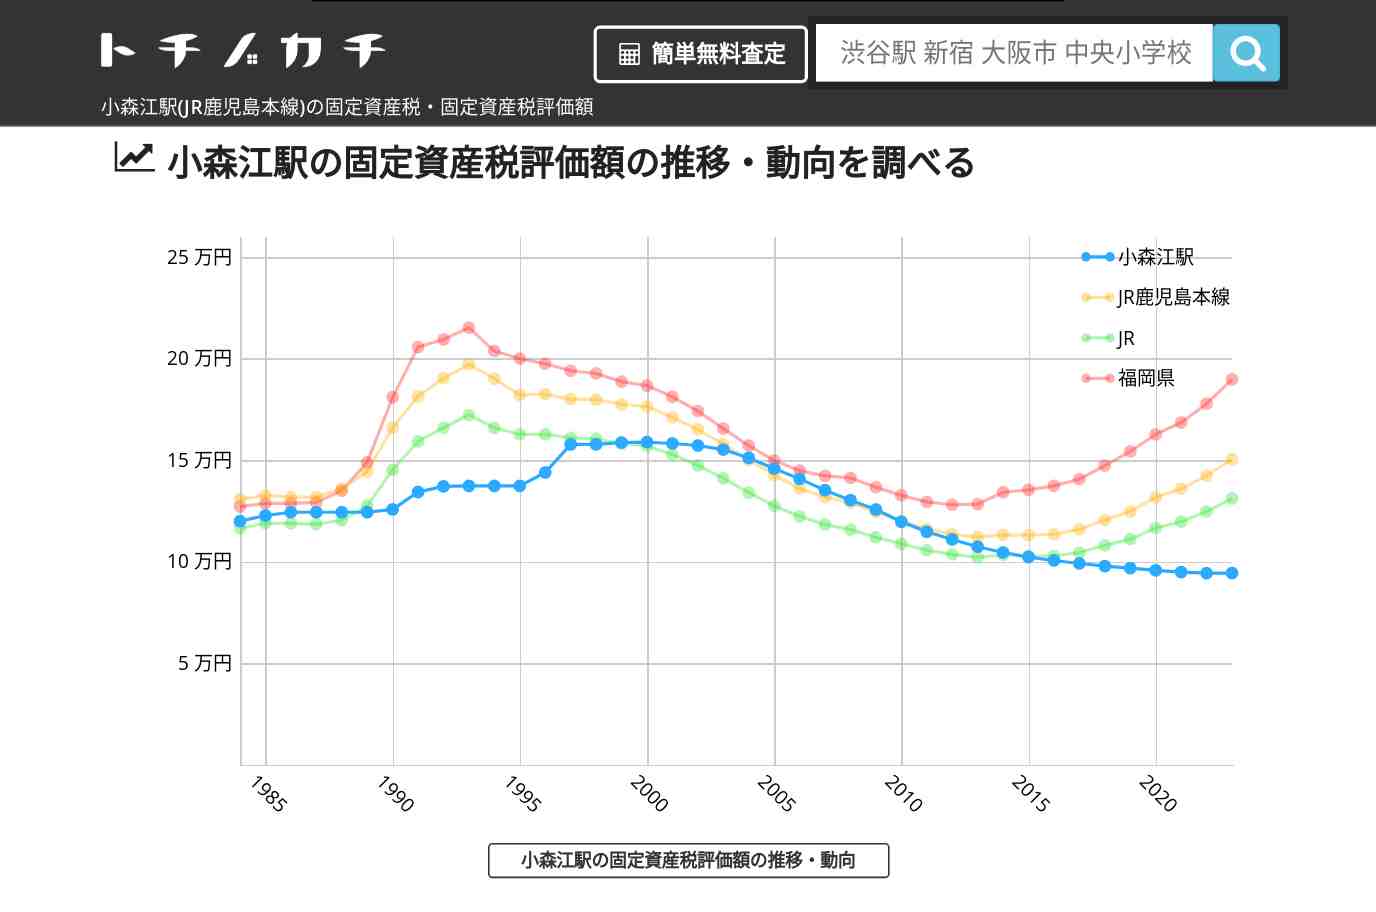 小森江駅(JR鹿児島本線)の固定資産税・固定資産税評価額 | トチノカチ